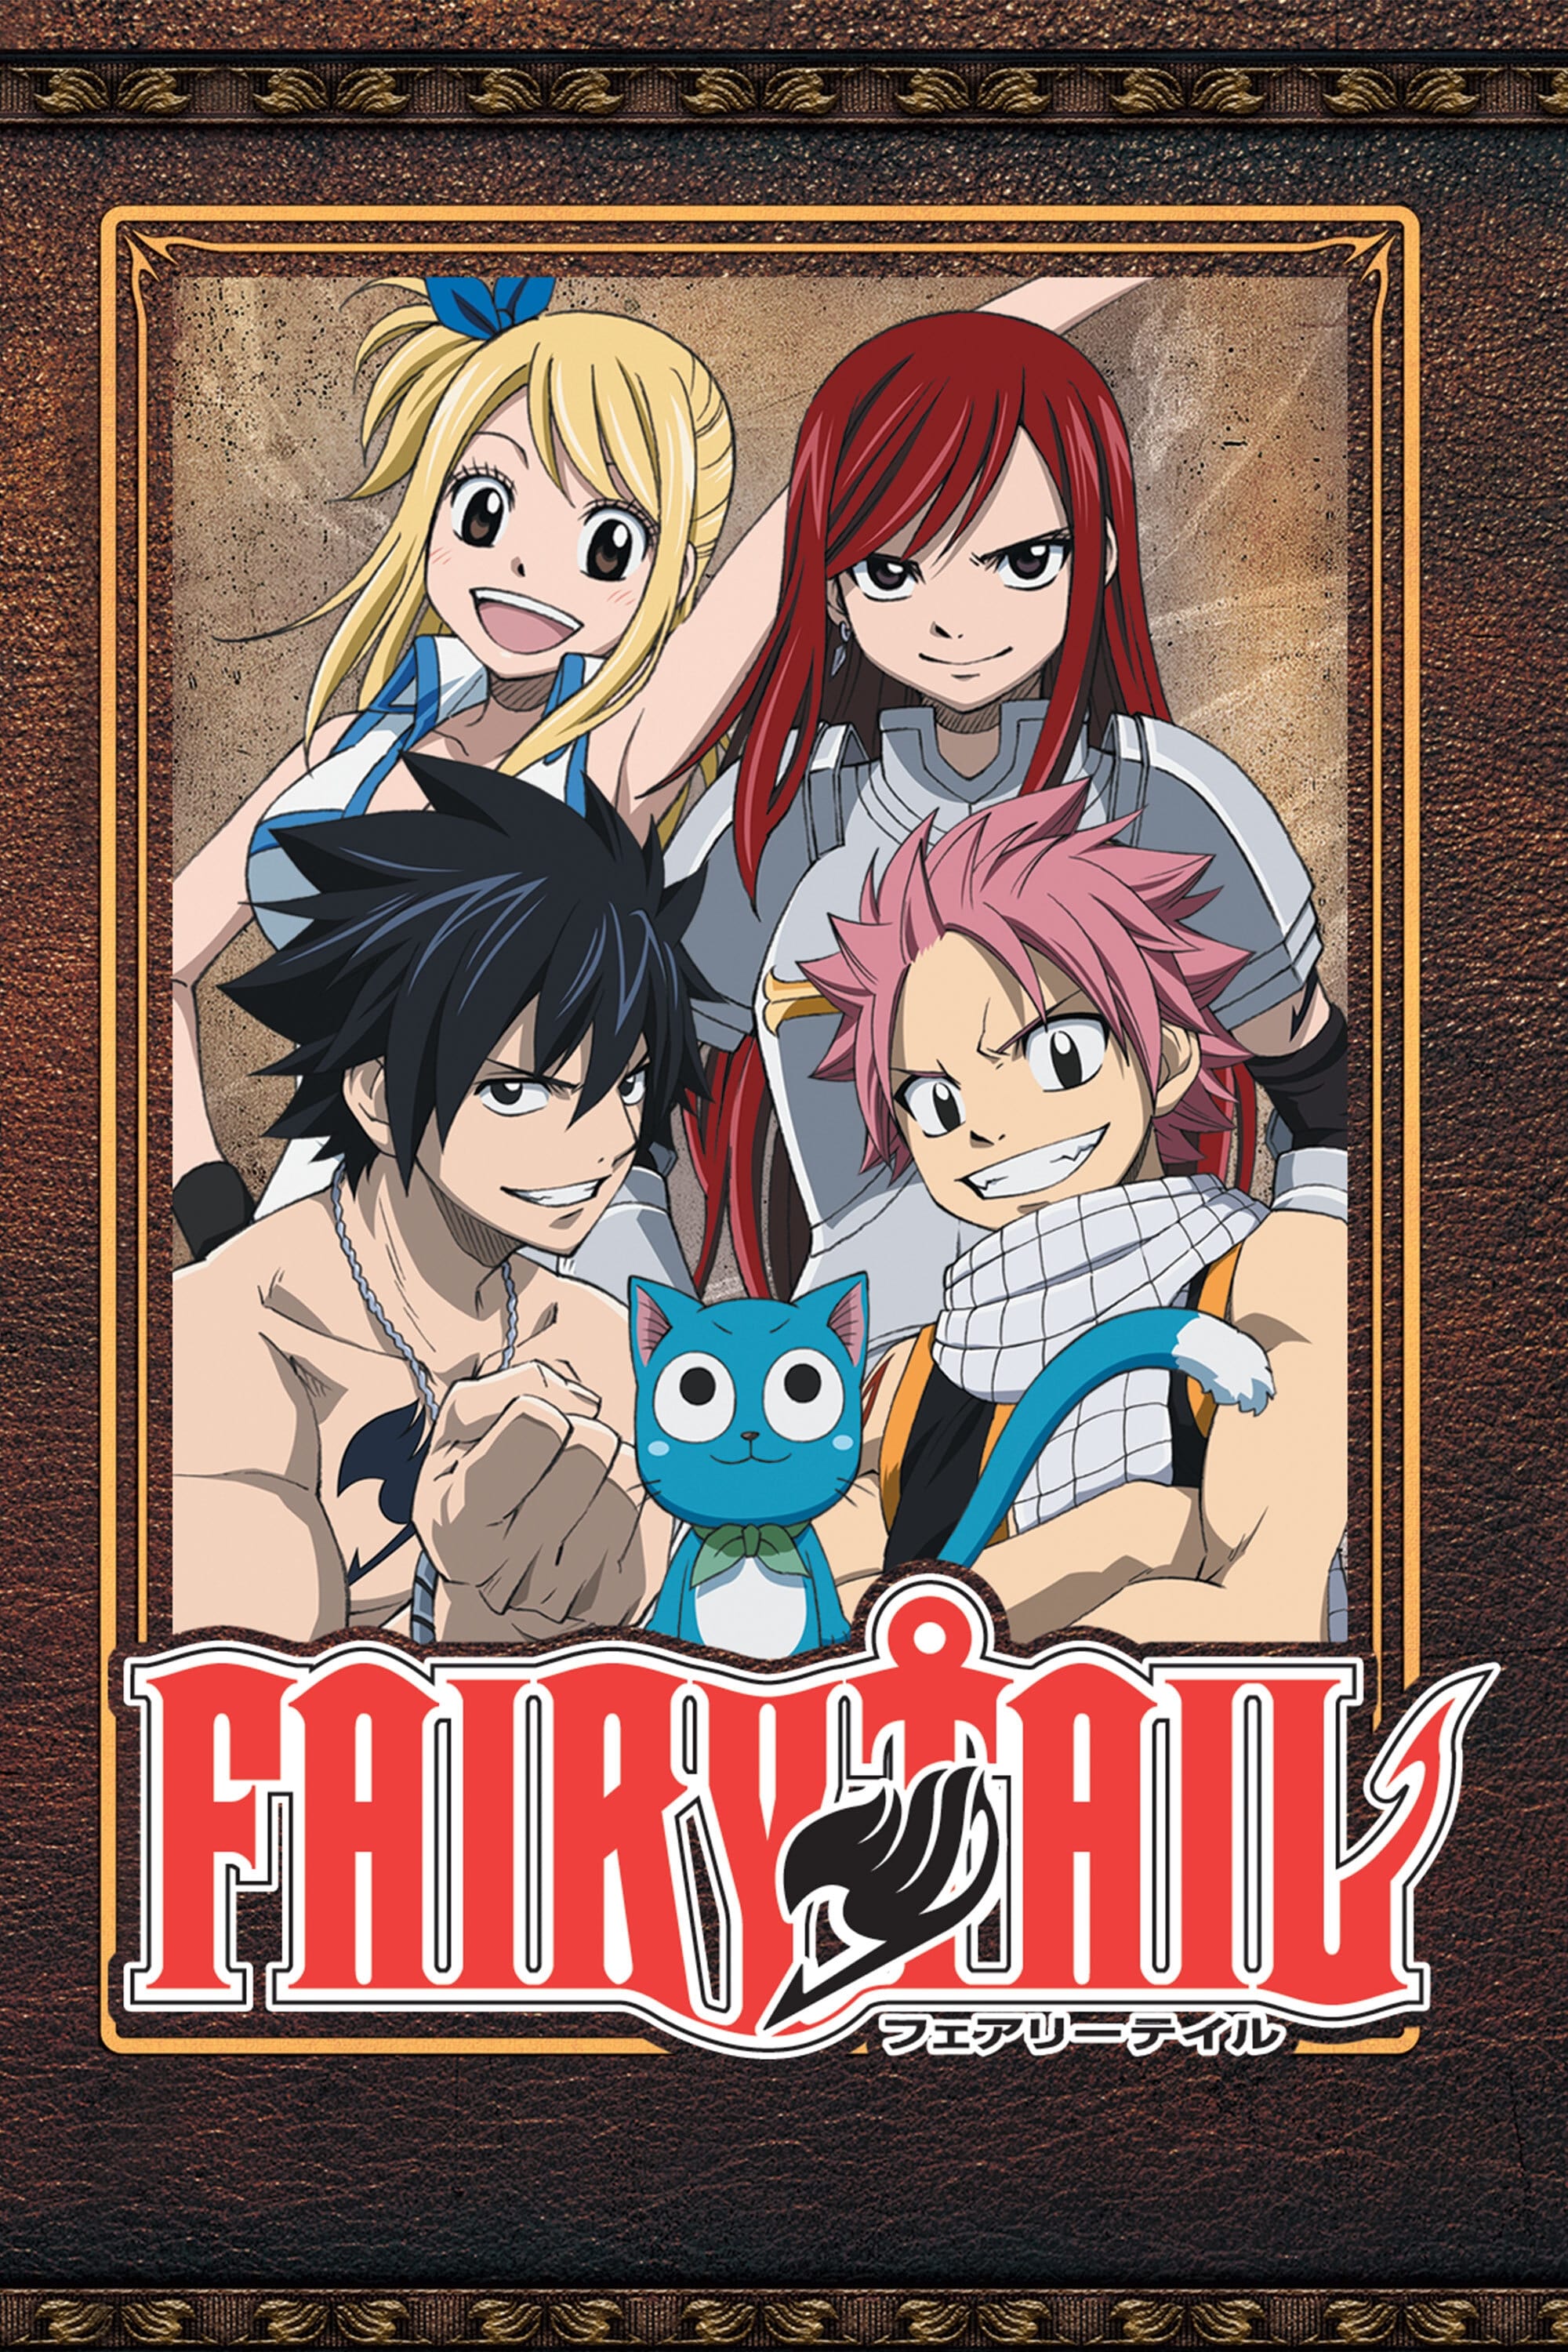 Fairy Tail (TV Series 2009–2019) - Series Cast & Crew - IMDb